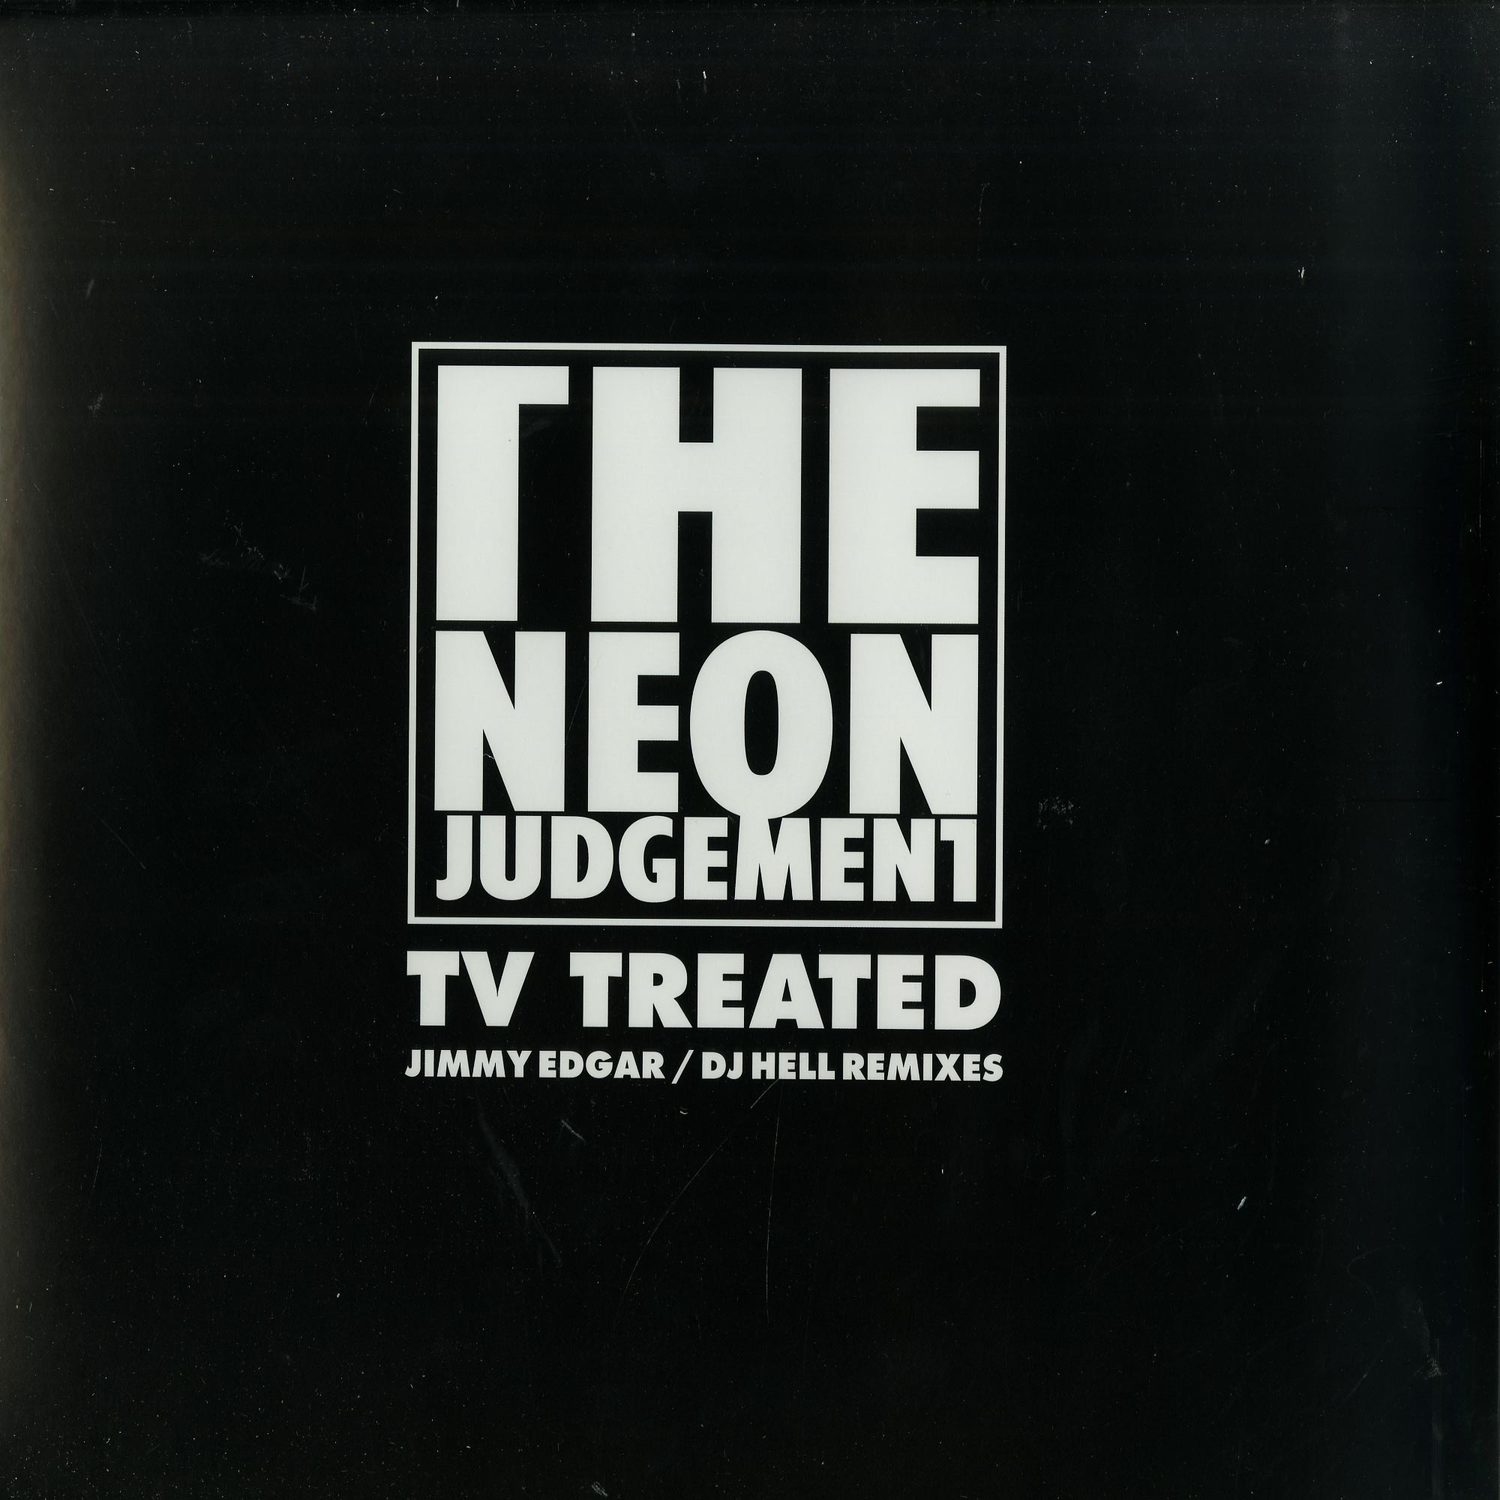 The Neon Judgement - TV TREATED 